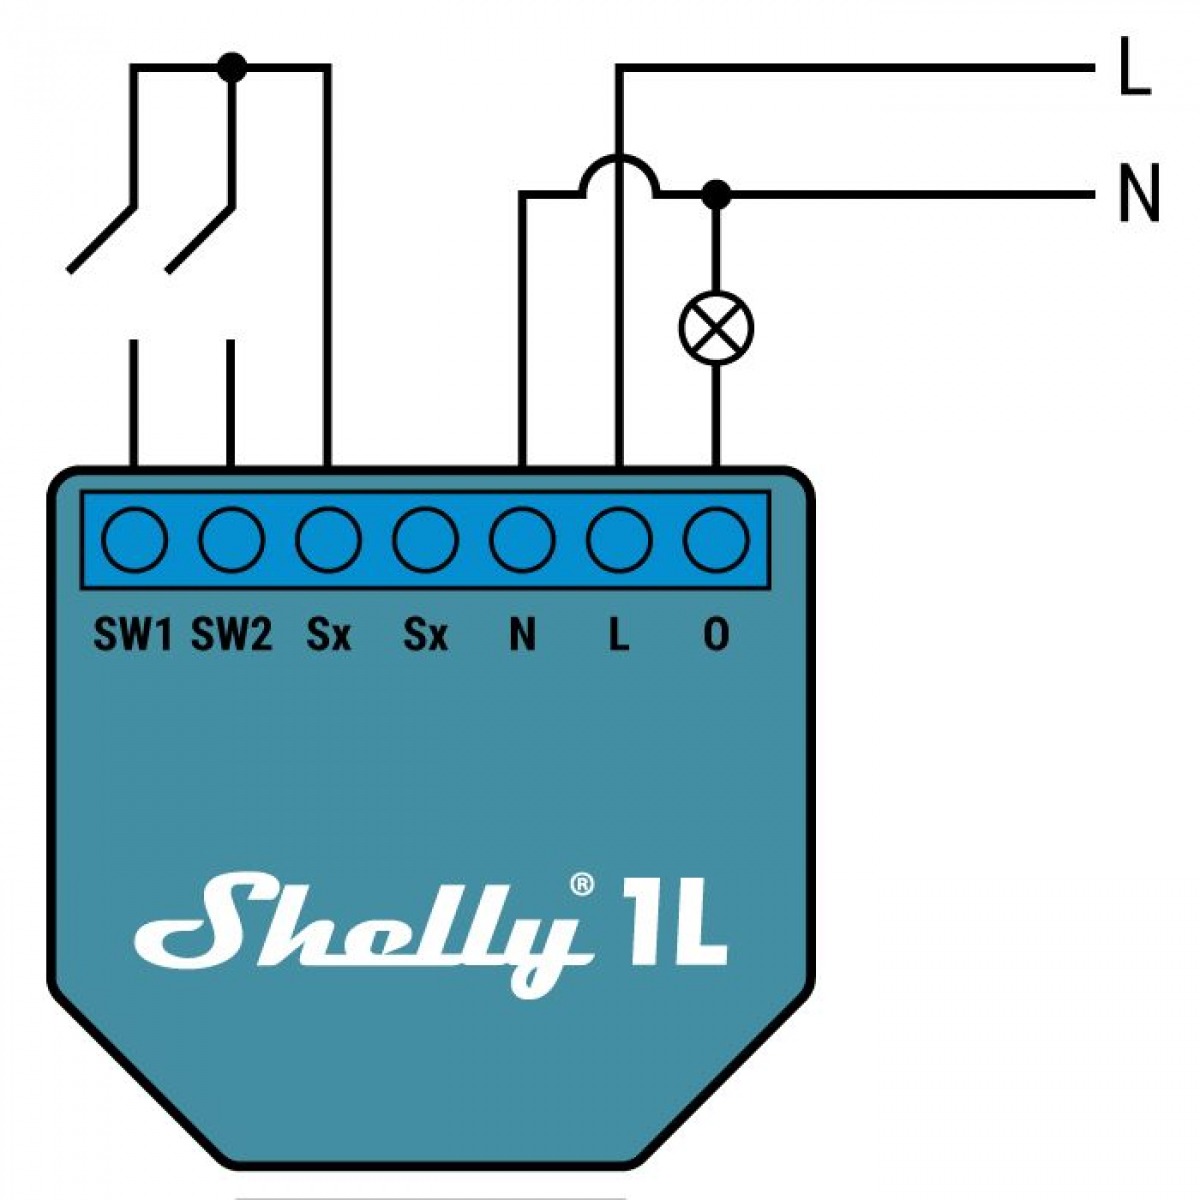 Shelly® 1L Smart Wifi WLAN Funk Schalter Relais Schaltaktor max 4A benötigt kein N (Neutralleiter)